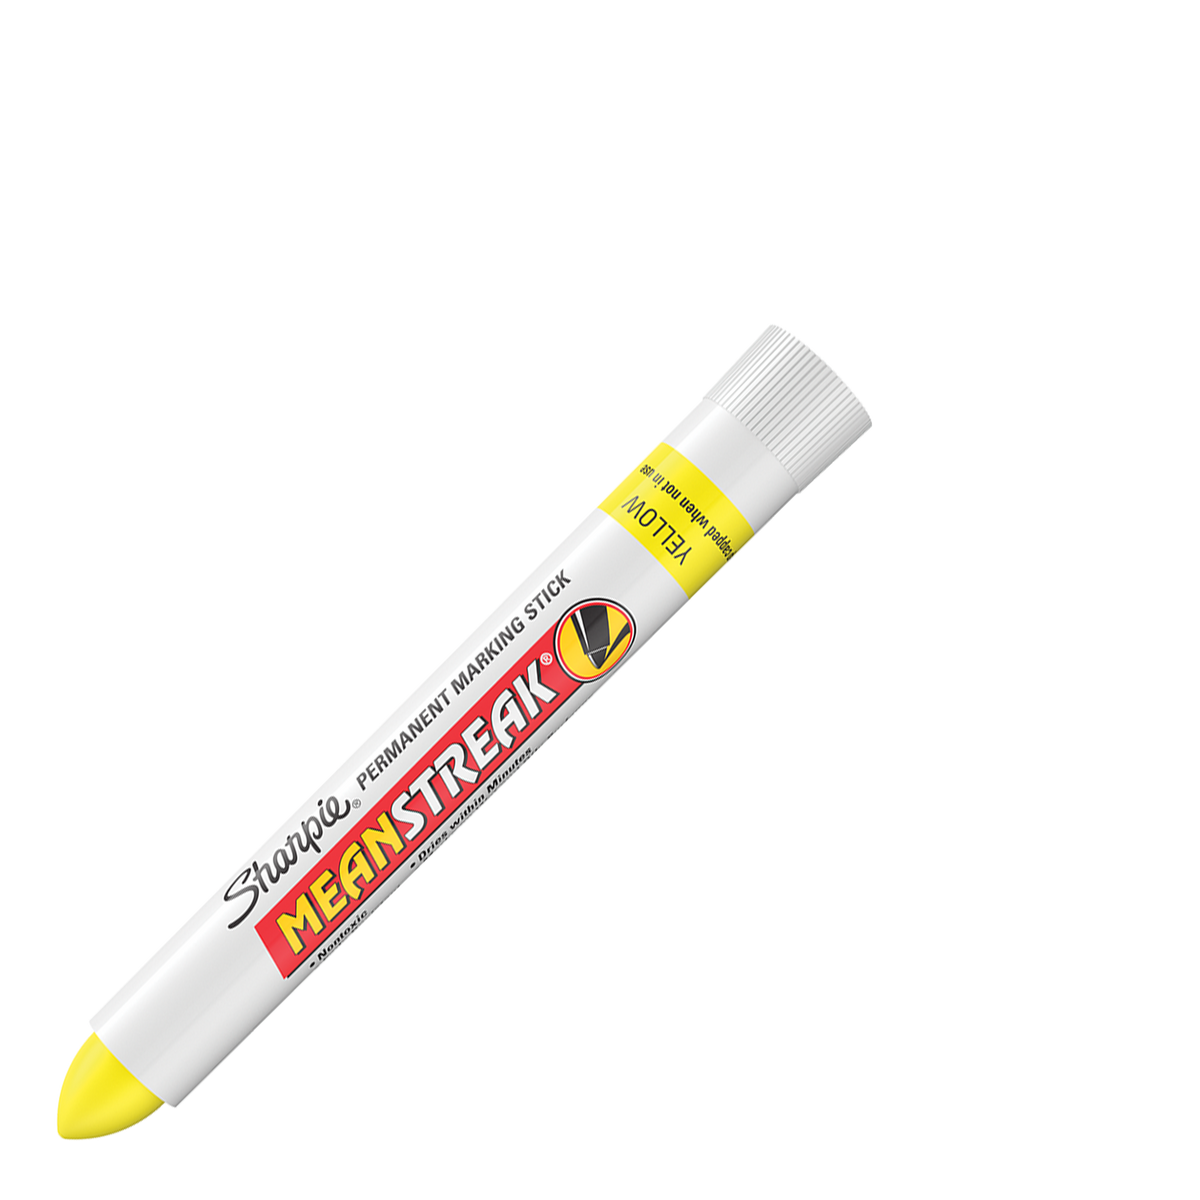 Sharpie Mean Streak Paint Crayon – IndustrialMarkingPens